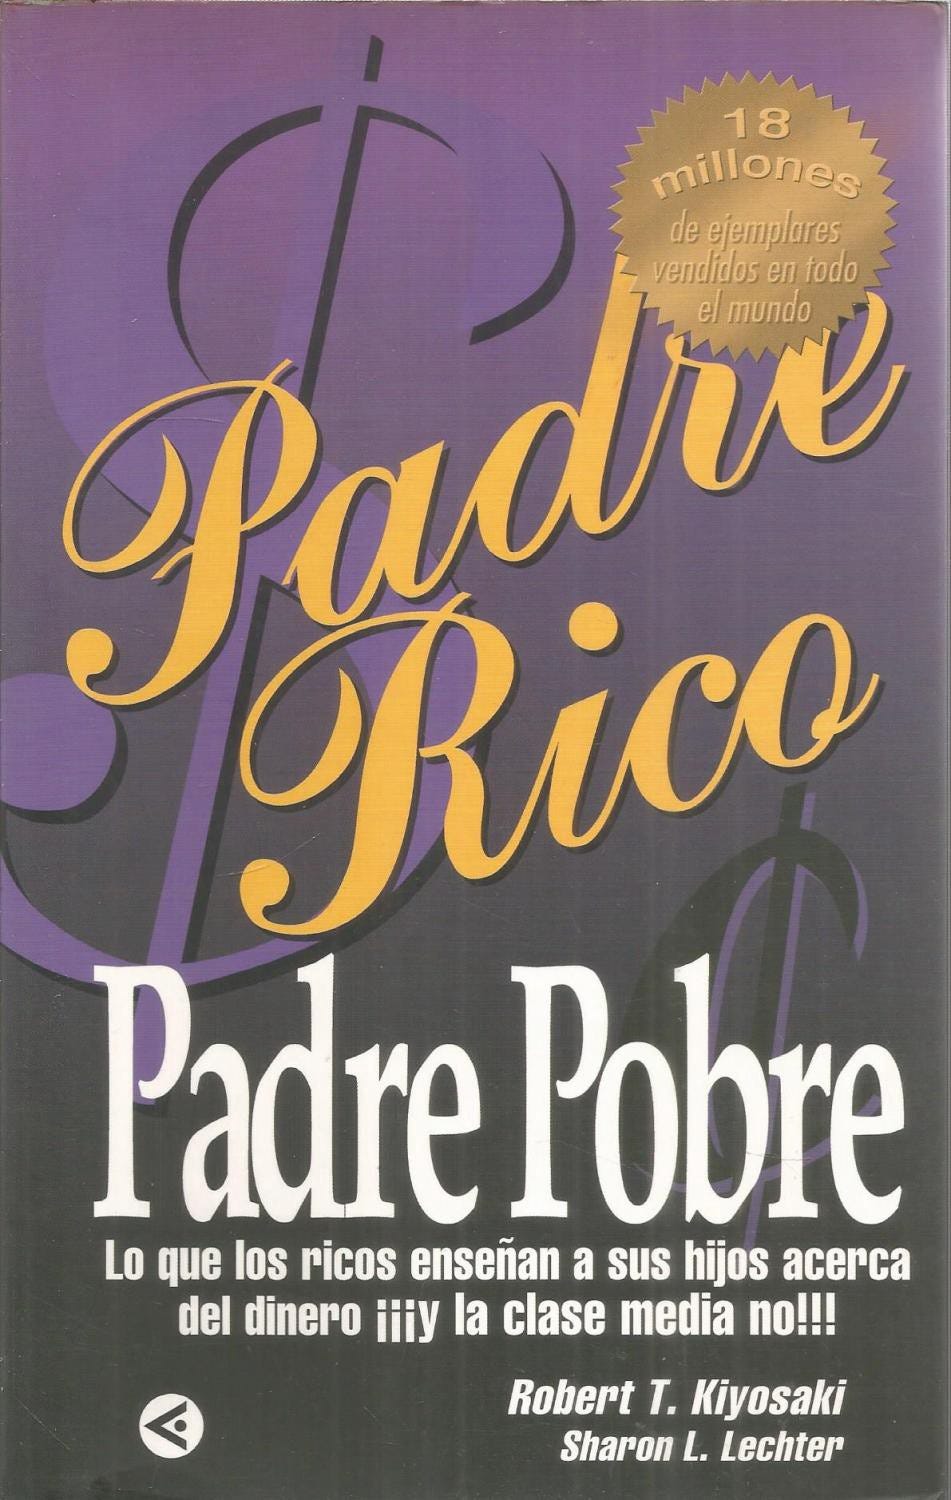 Por si no lo leíste: Padre Rico, Padre Pobre | by Jean Del Peso | Stratefy  | Medium